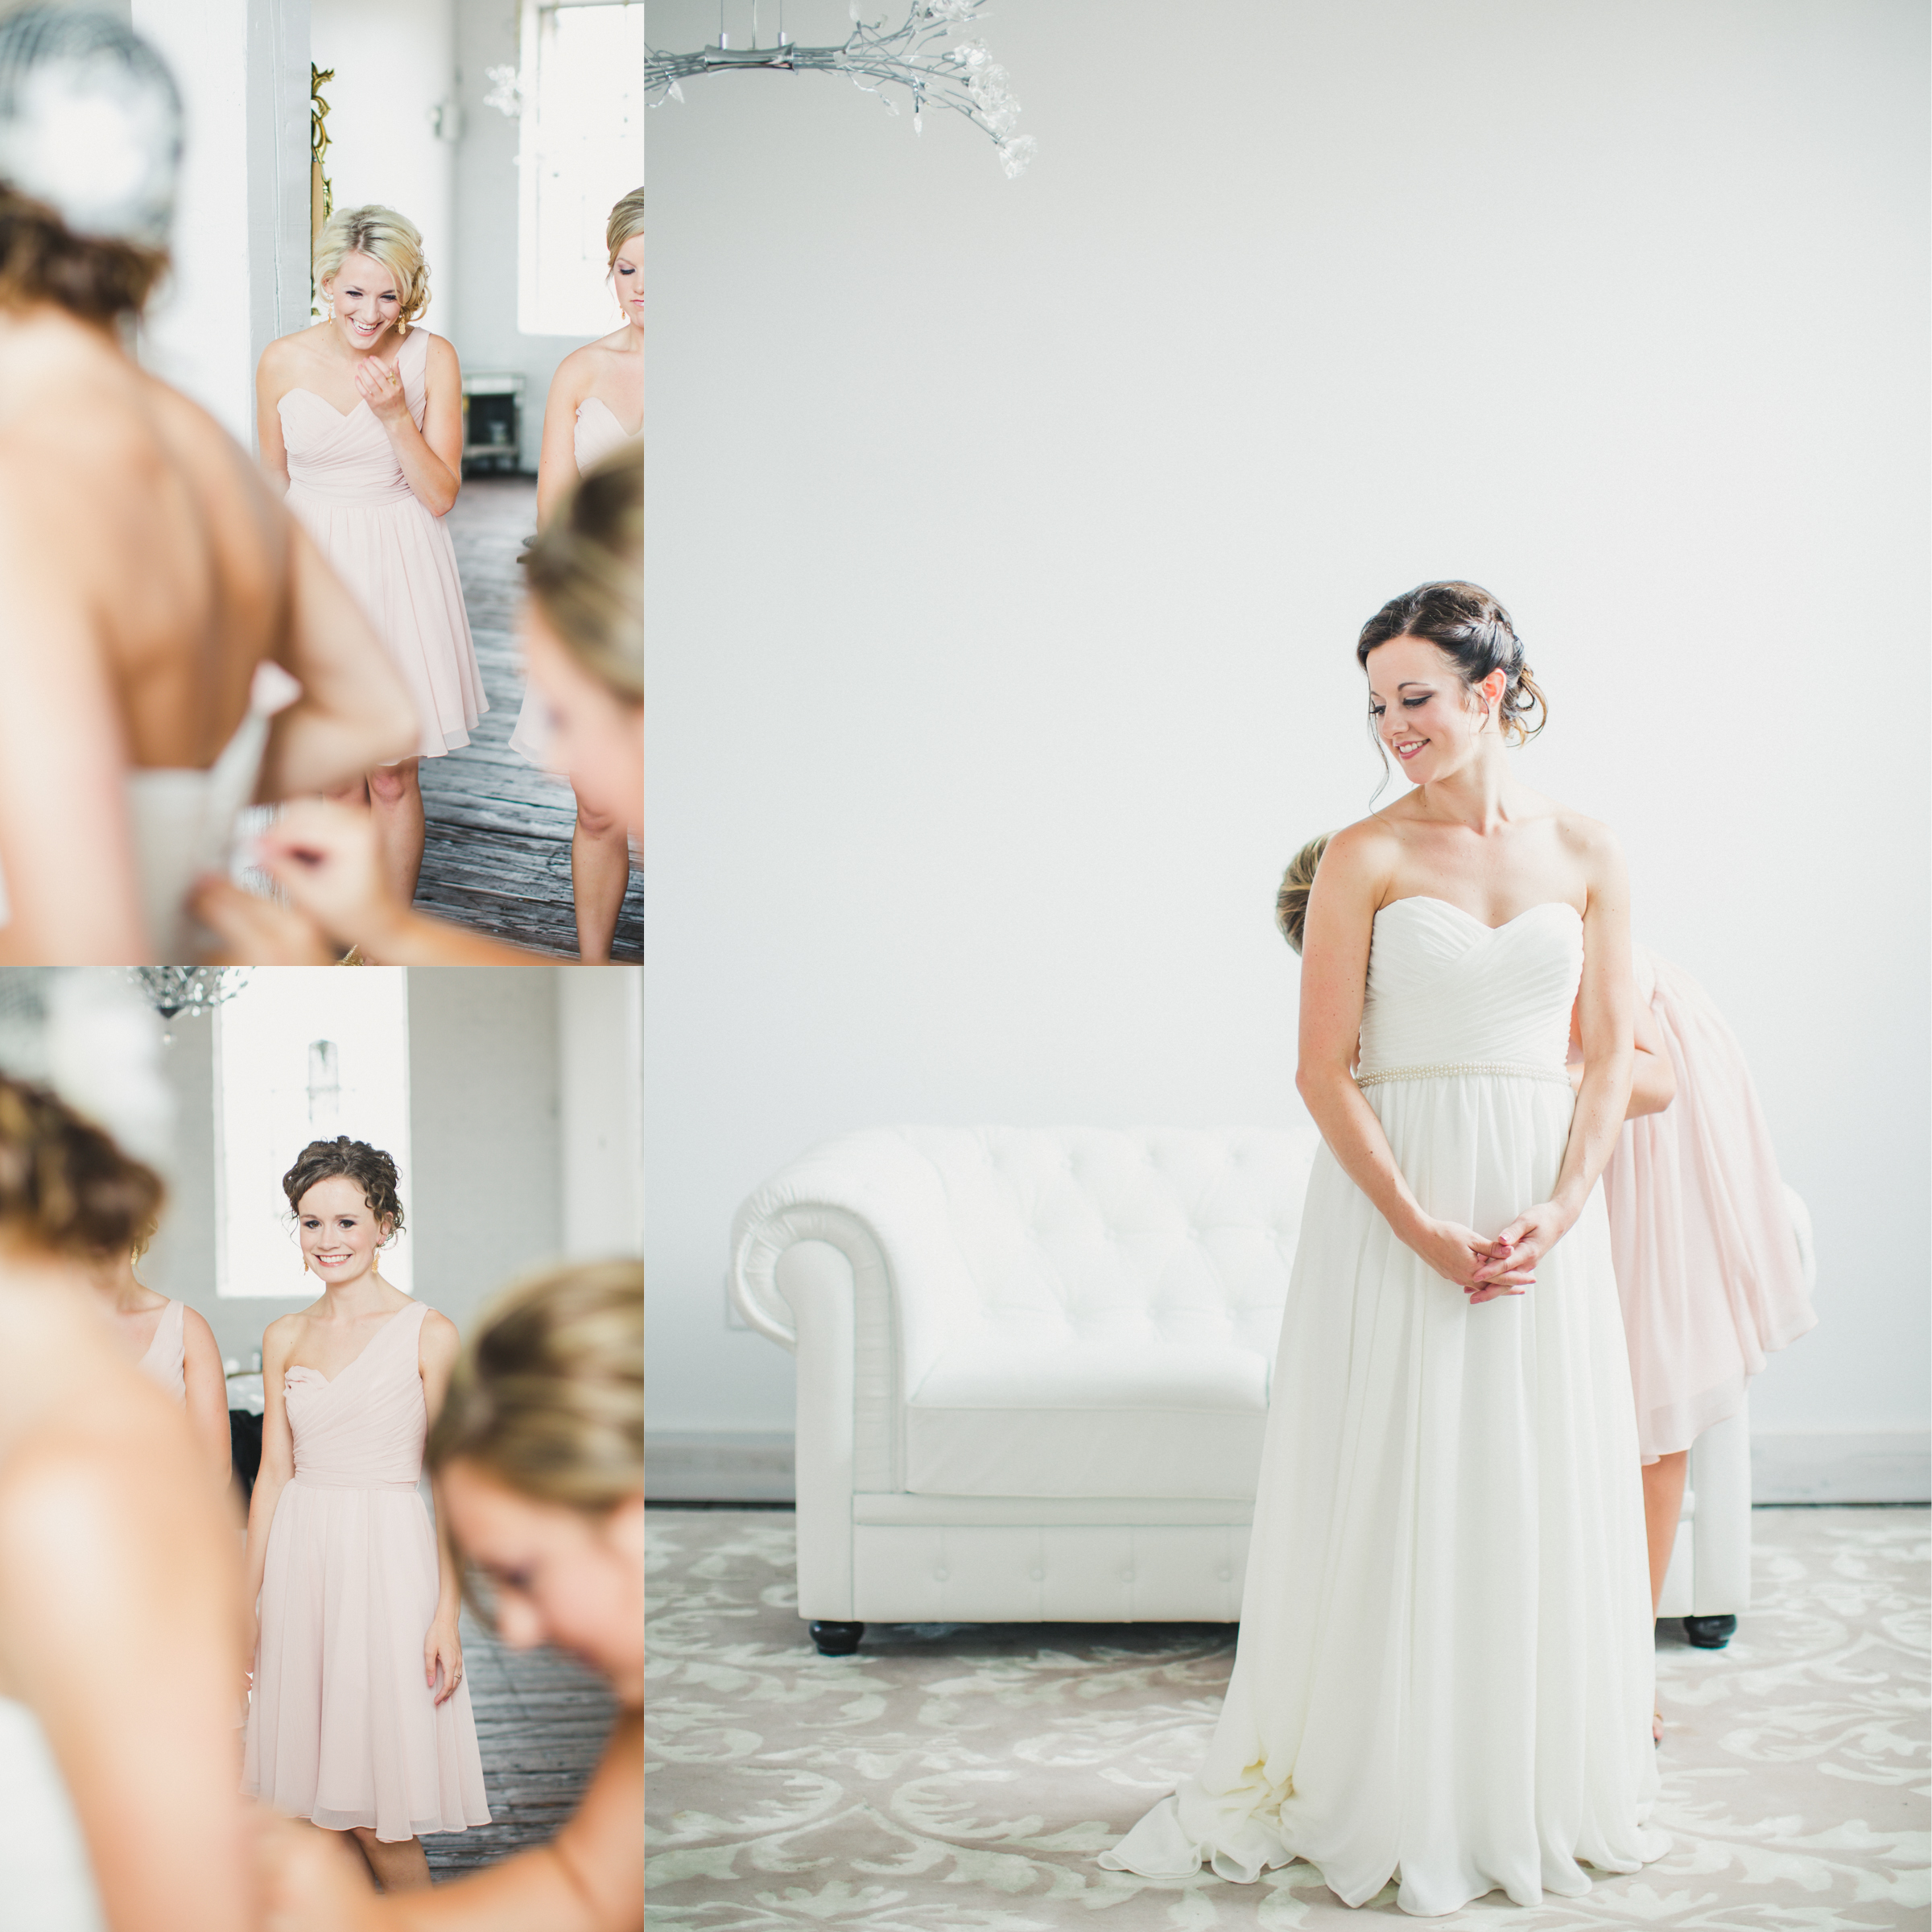 Brainerd MN Wedding Getting Ready Suite Photography by Aimee Jobe.jpg